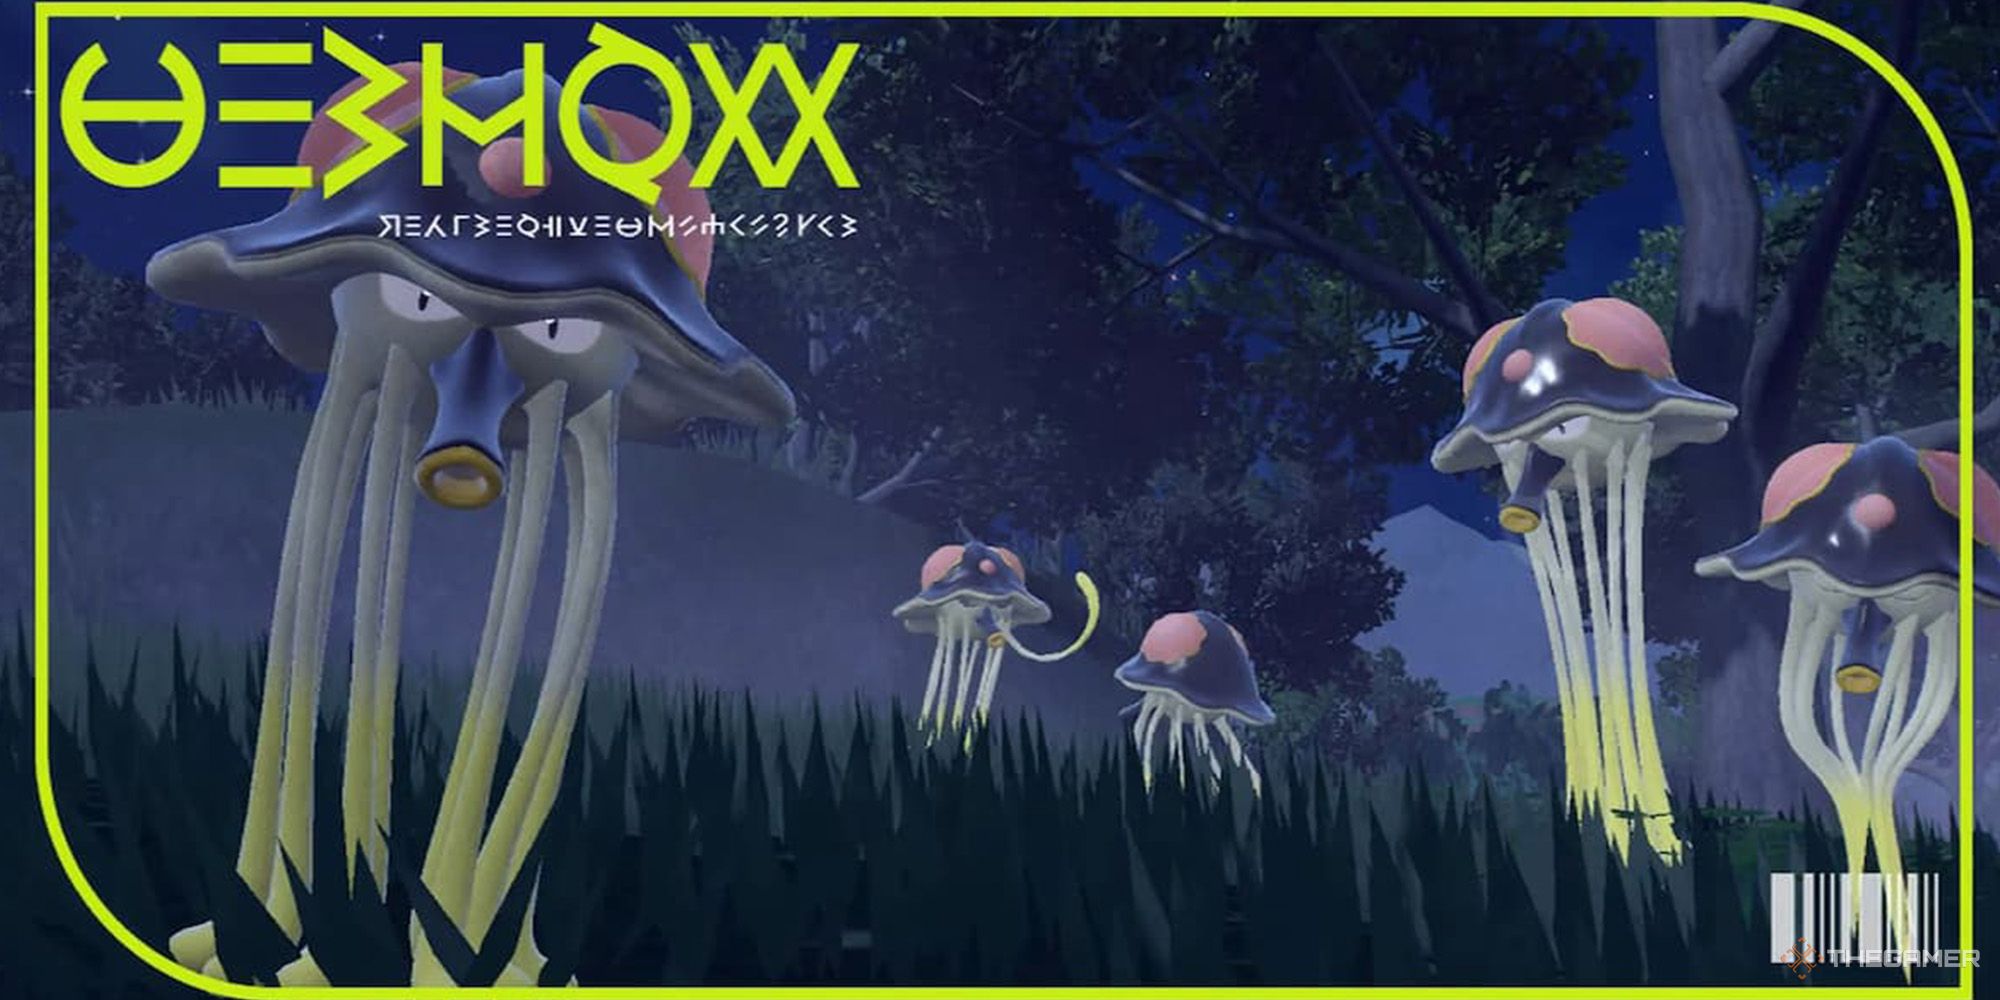 Toedscruel gathering in a dark forest in their Pokedex image from Pokemon Scarlet & Violet.